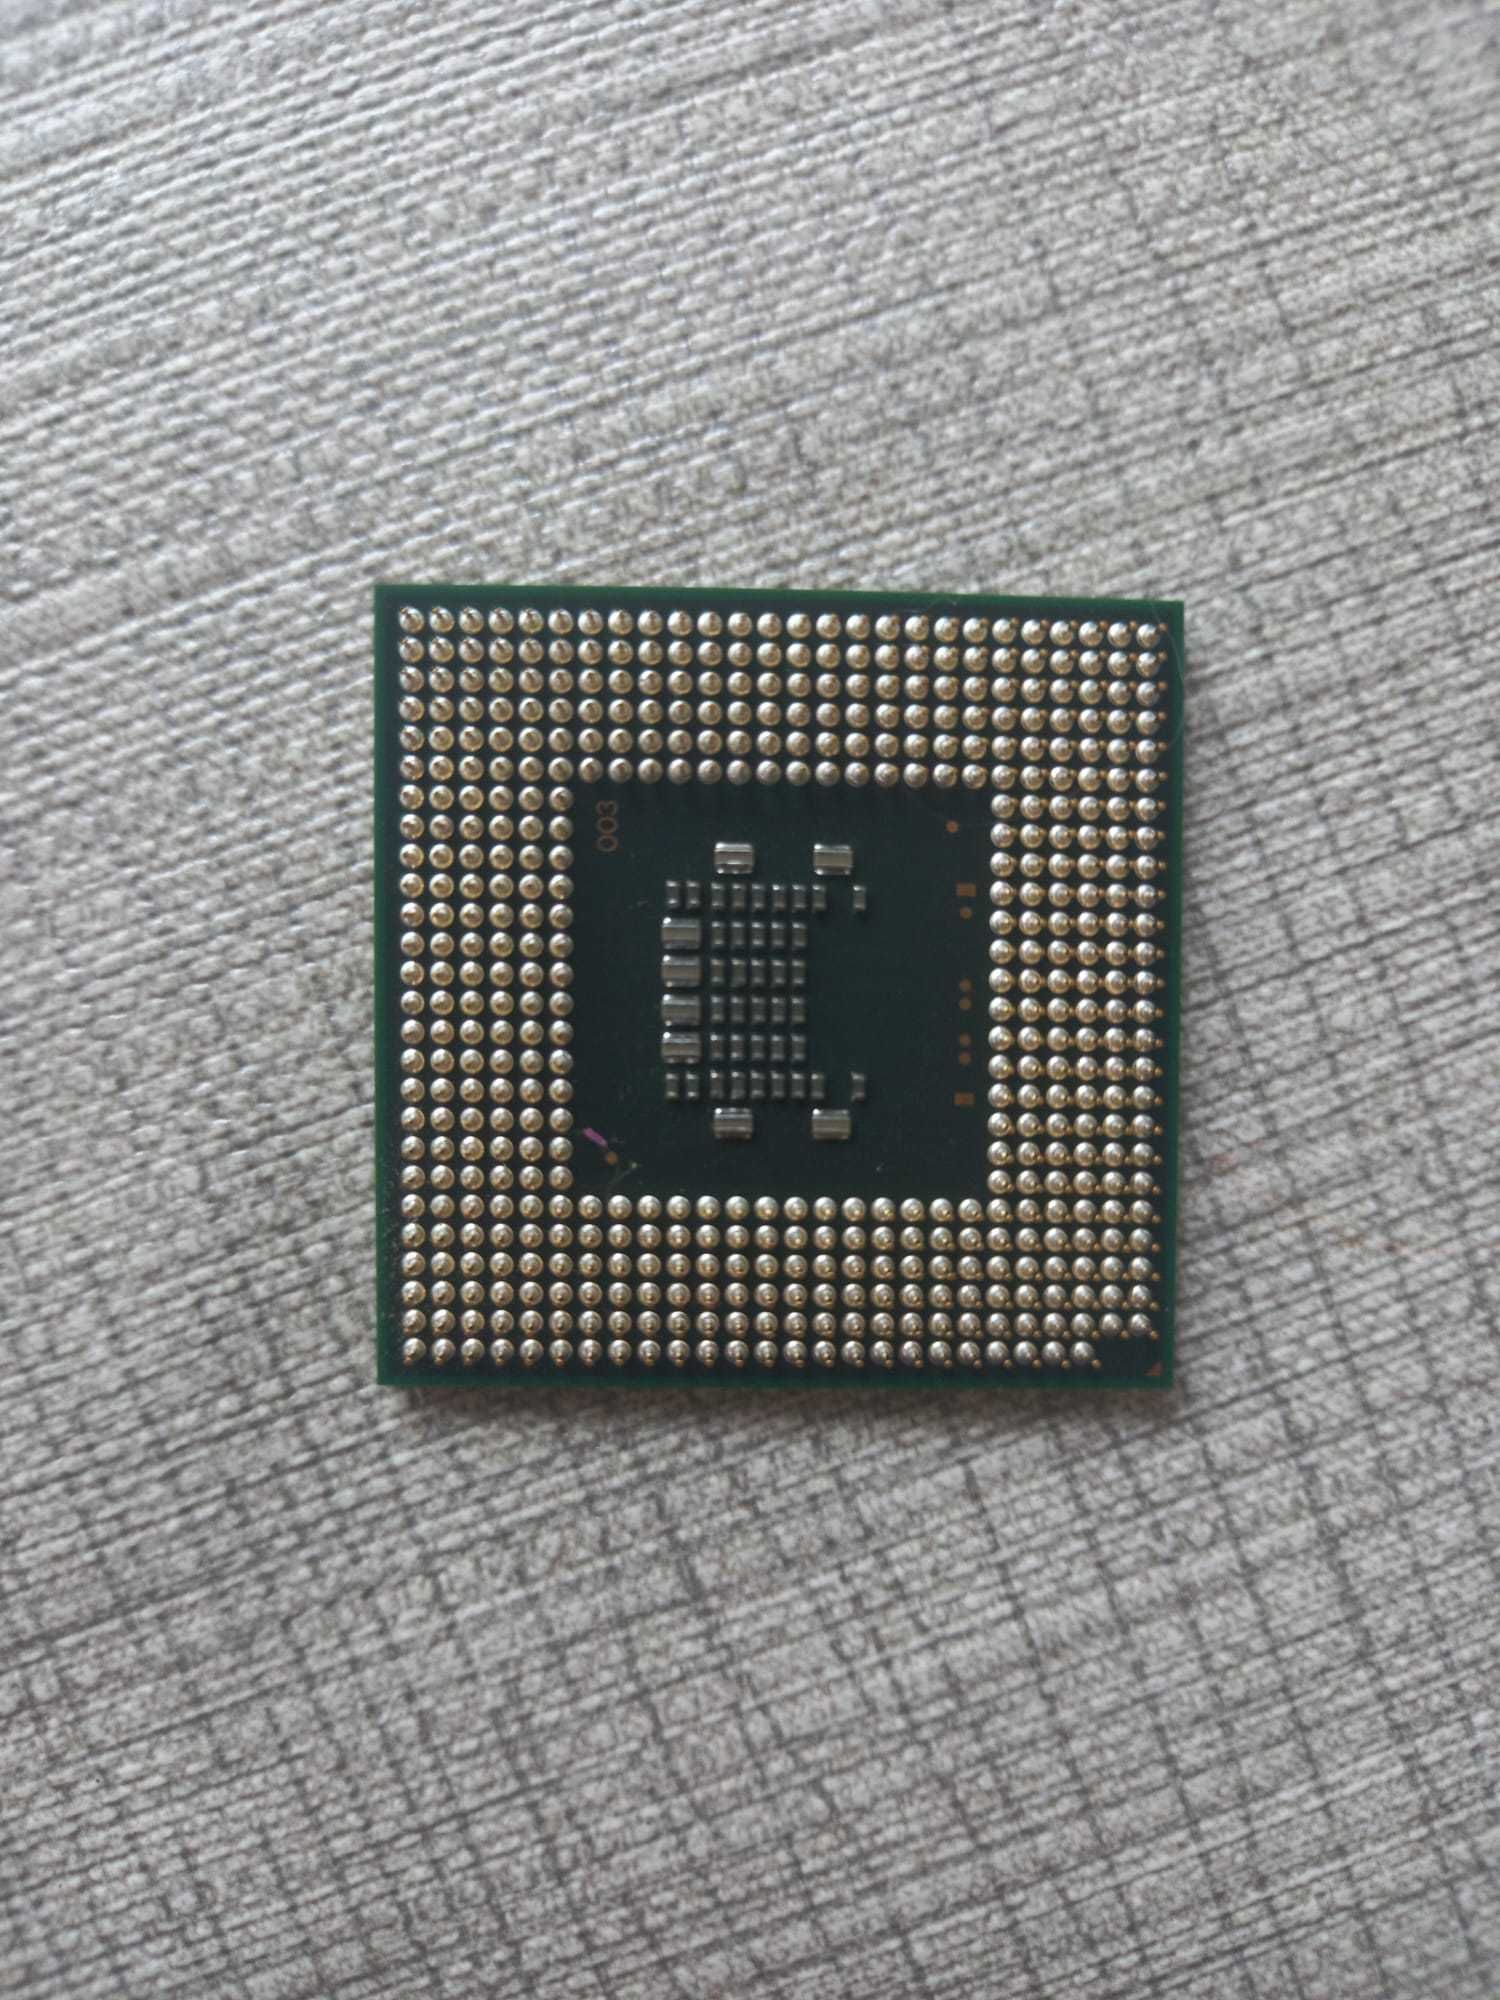 Procesor Intel Pentium T3200 64bit 2,0Ghz